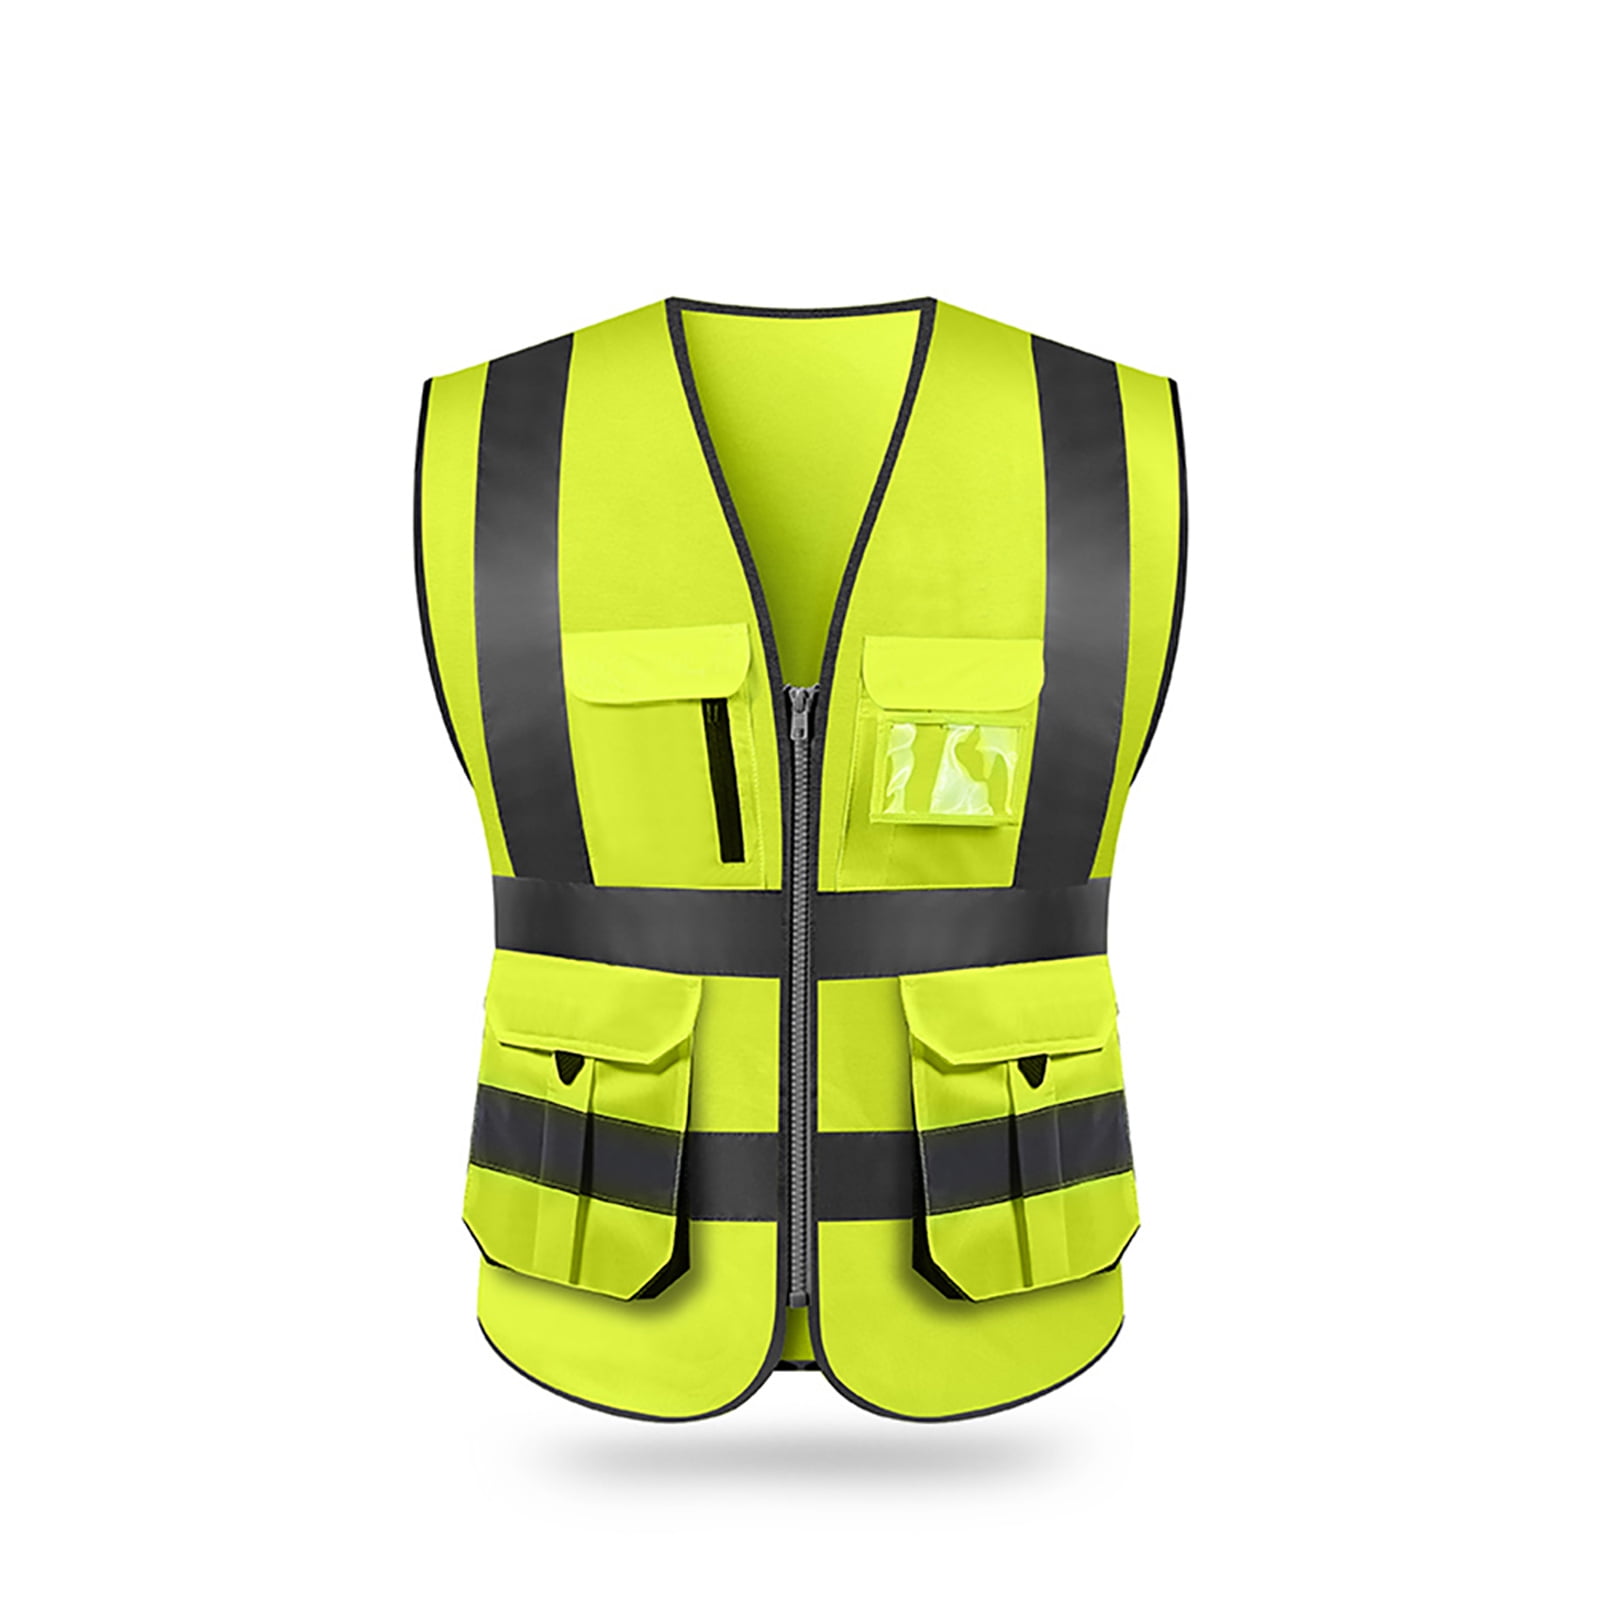 Details about   Reflective Safety Vest Night Visibility Sleeveless Zipper Vest with Multi-Pocket 